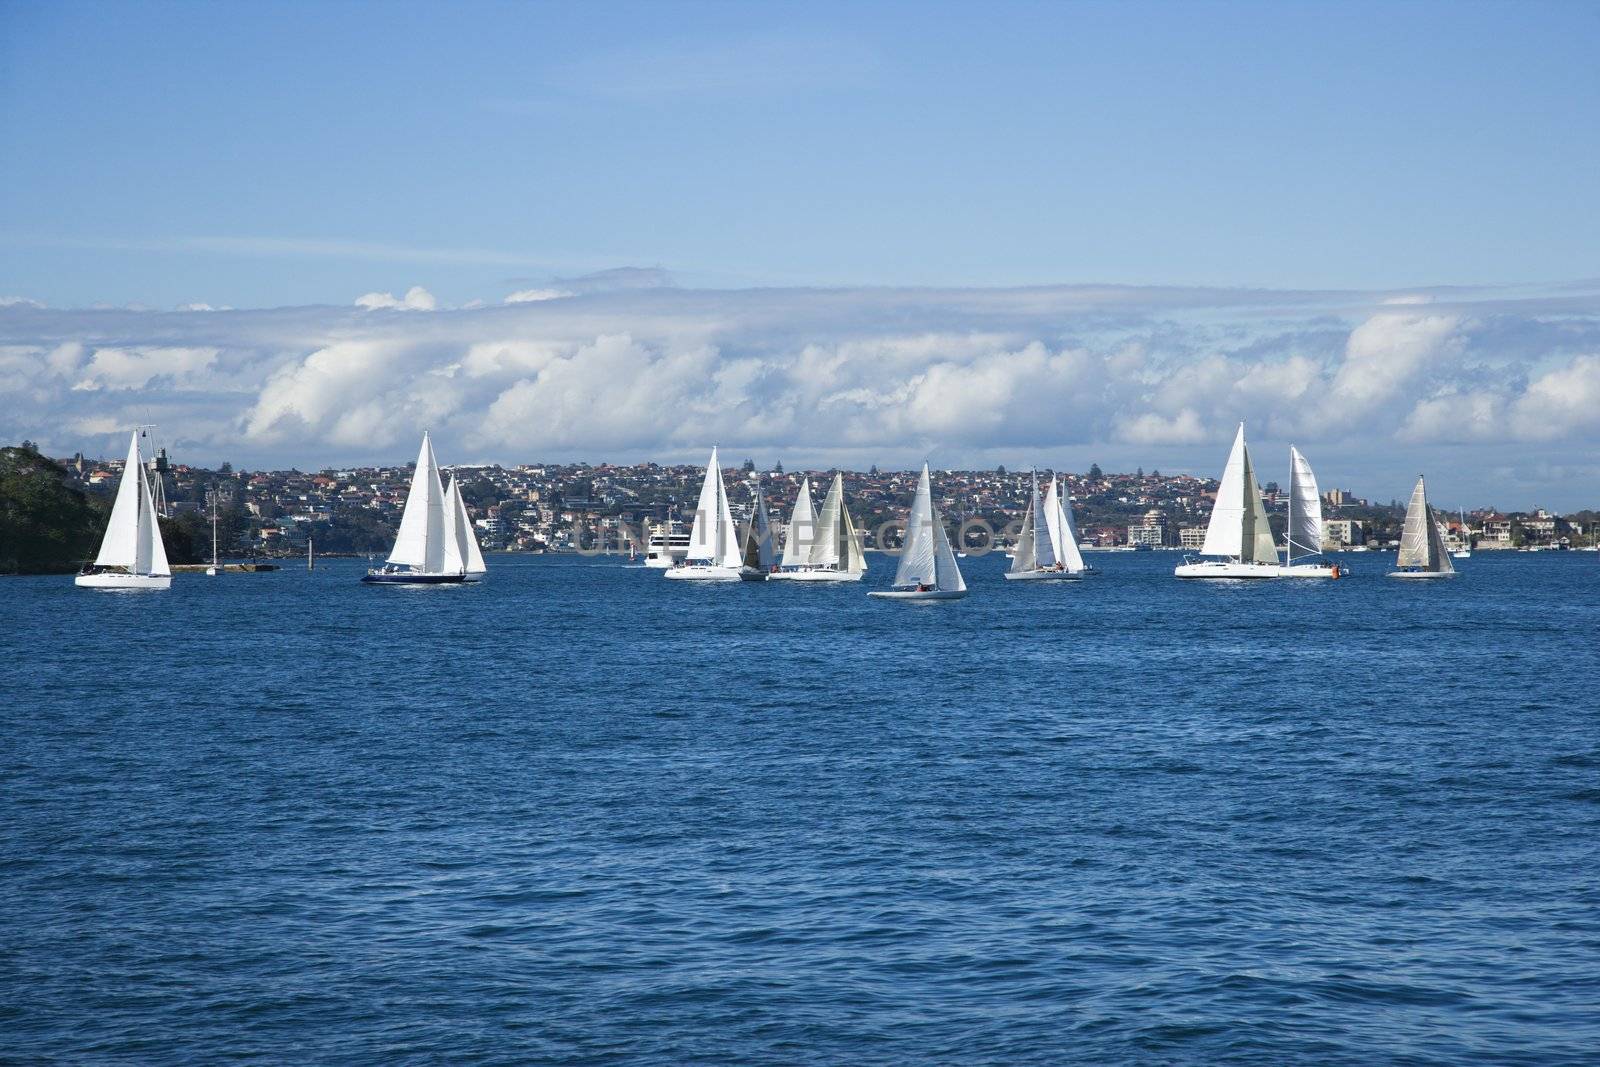 Sailboats on water in Sydney, Australia.